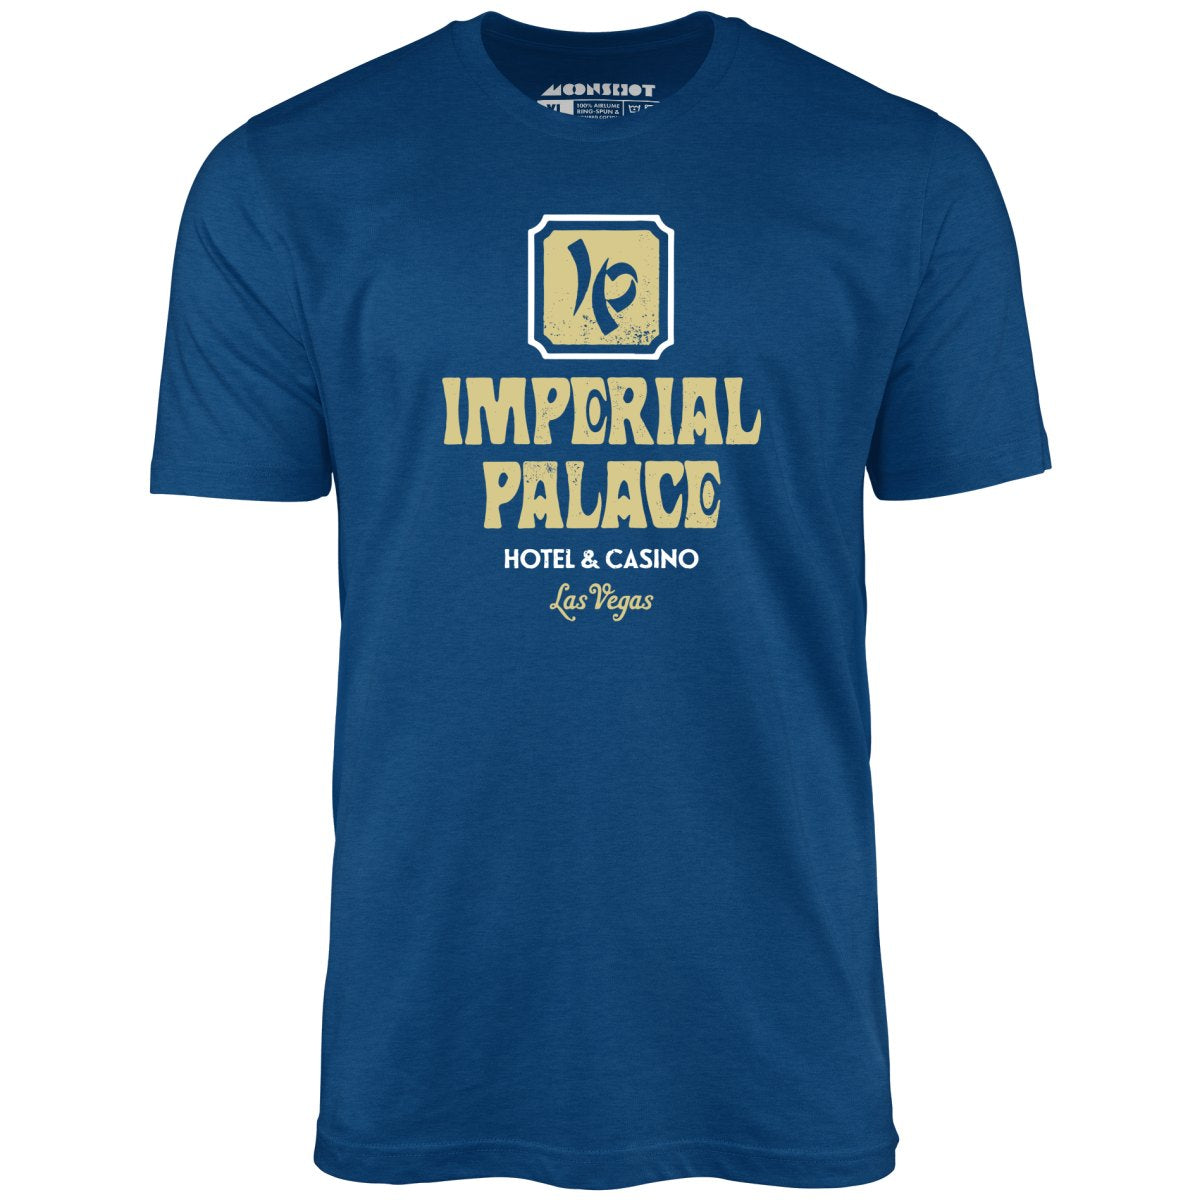 Imperial Palace Hotel & Casino - Vintage Las Vegas - Unisex T-Shirt